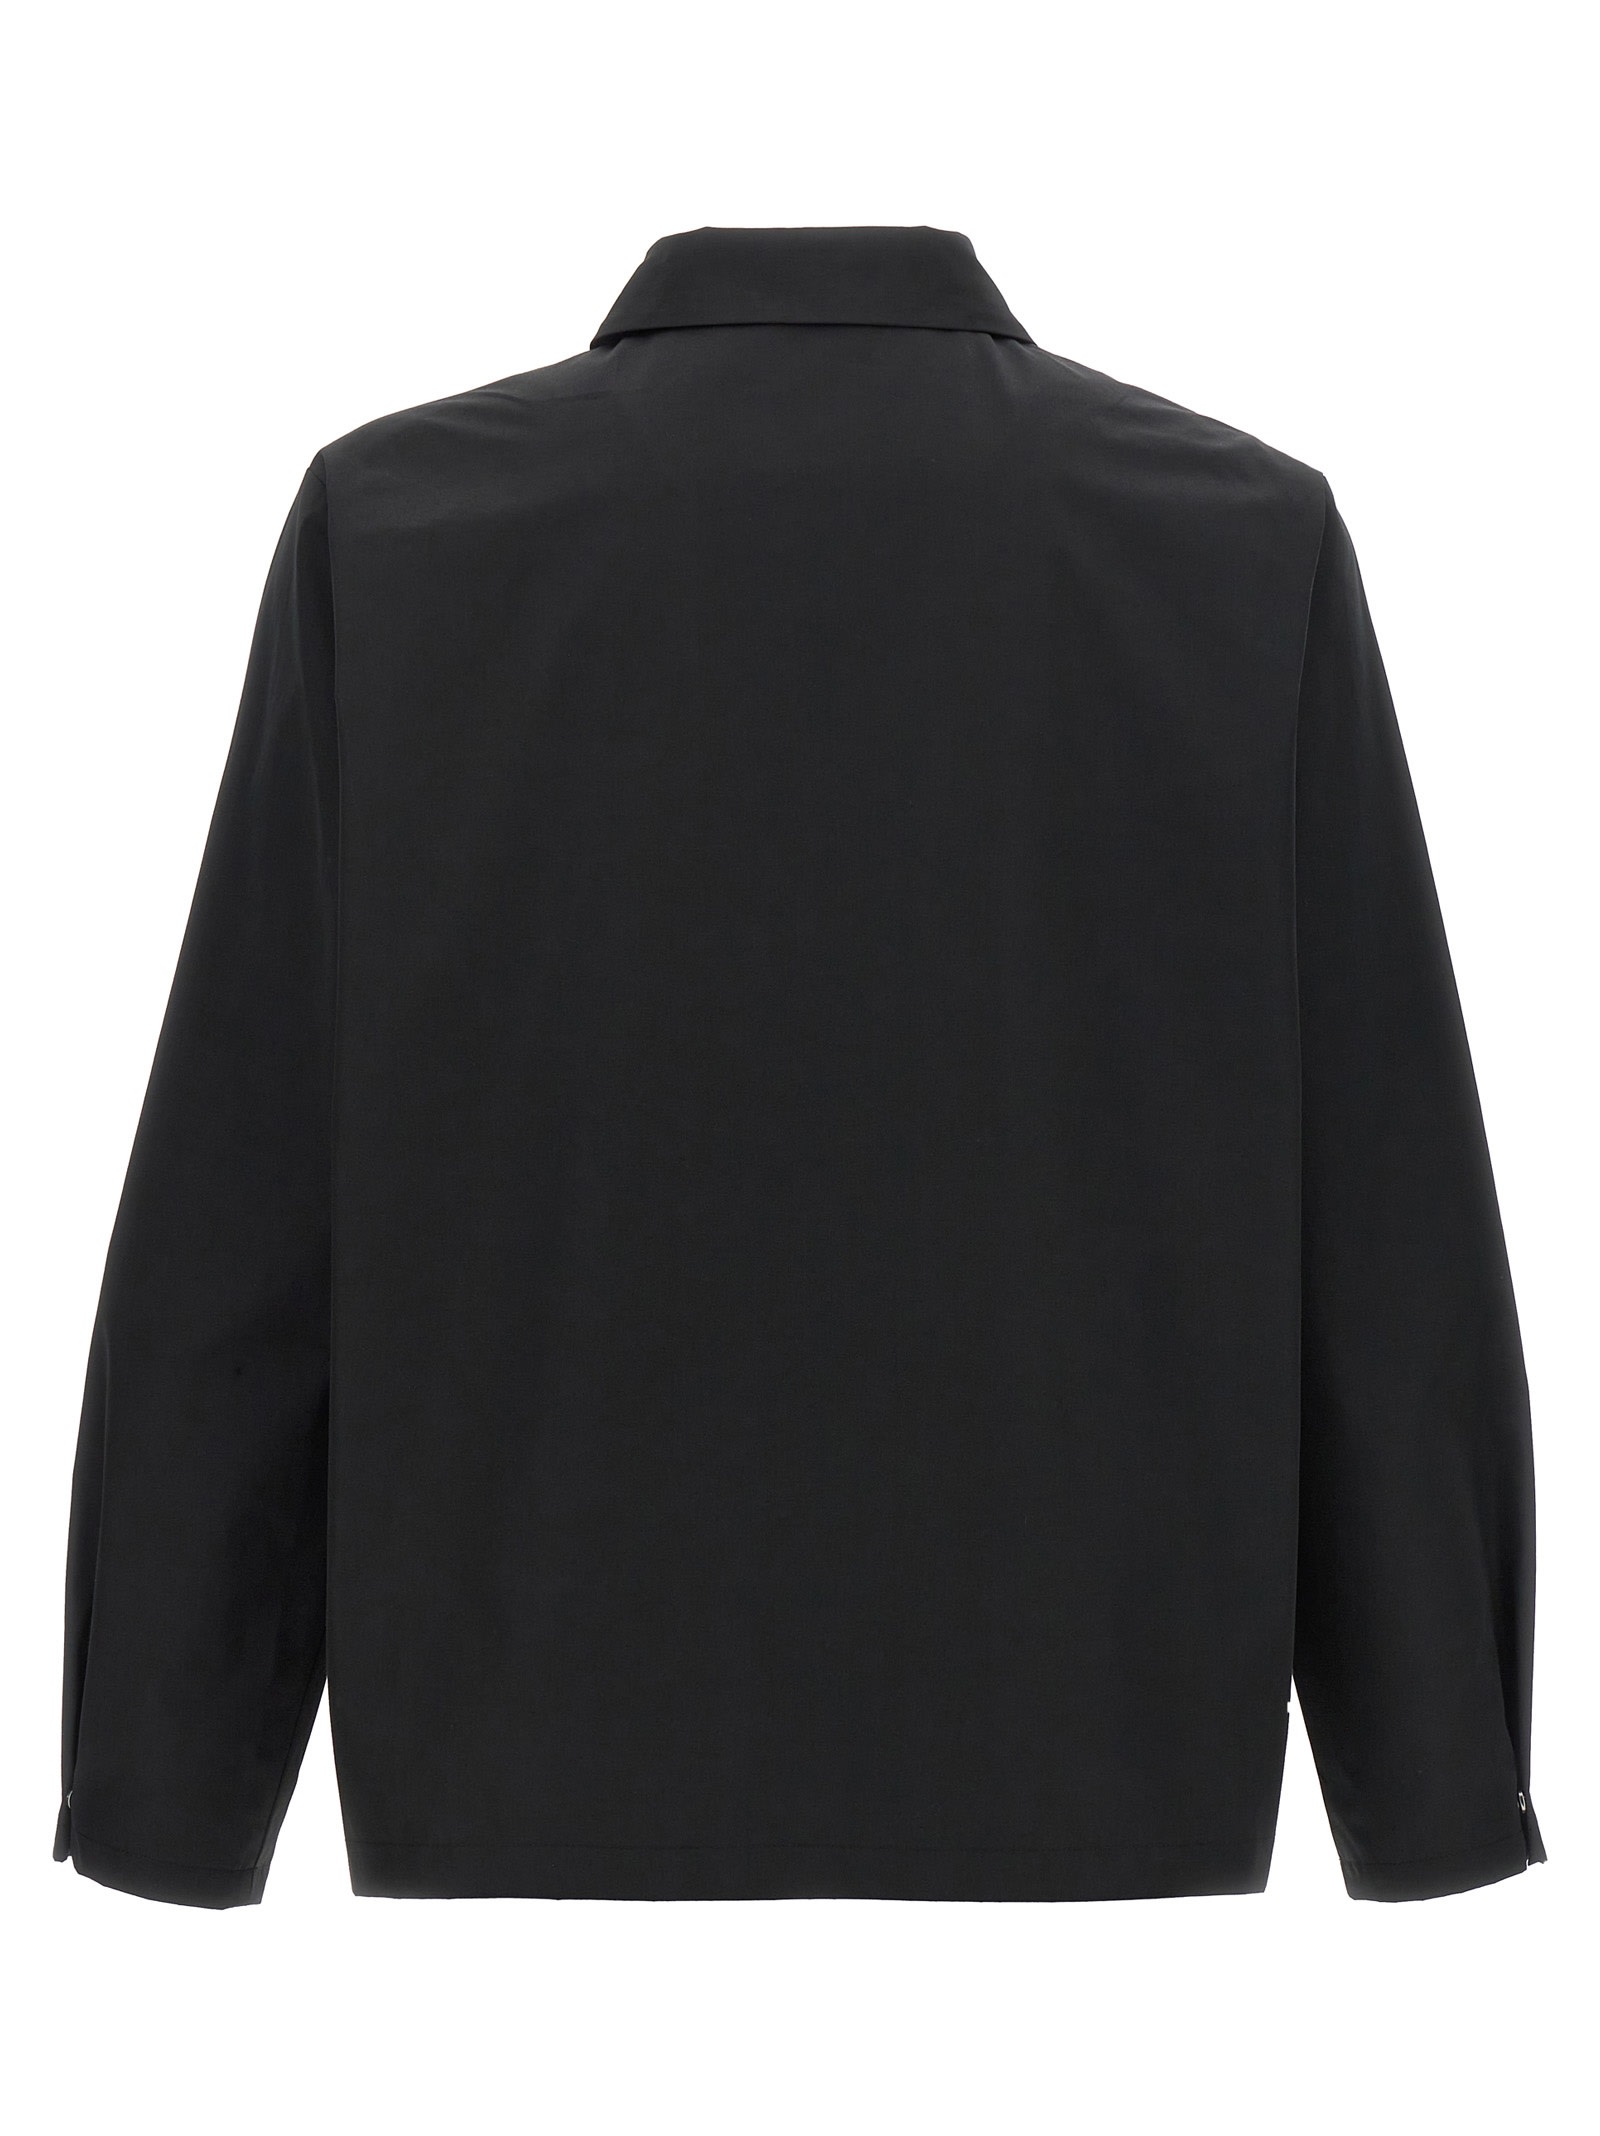 Shop Apc Regis Overshirt In Black